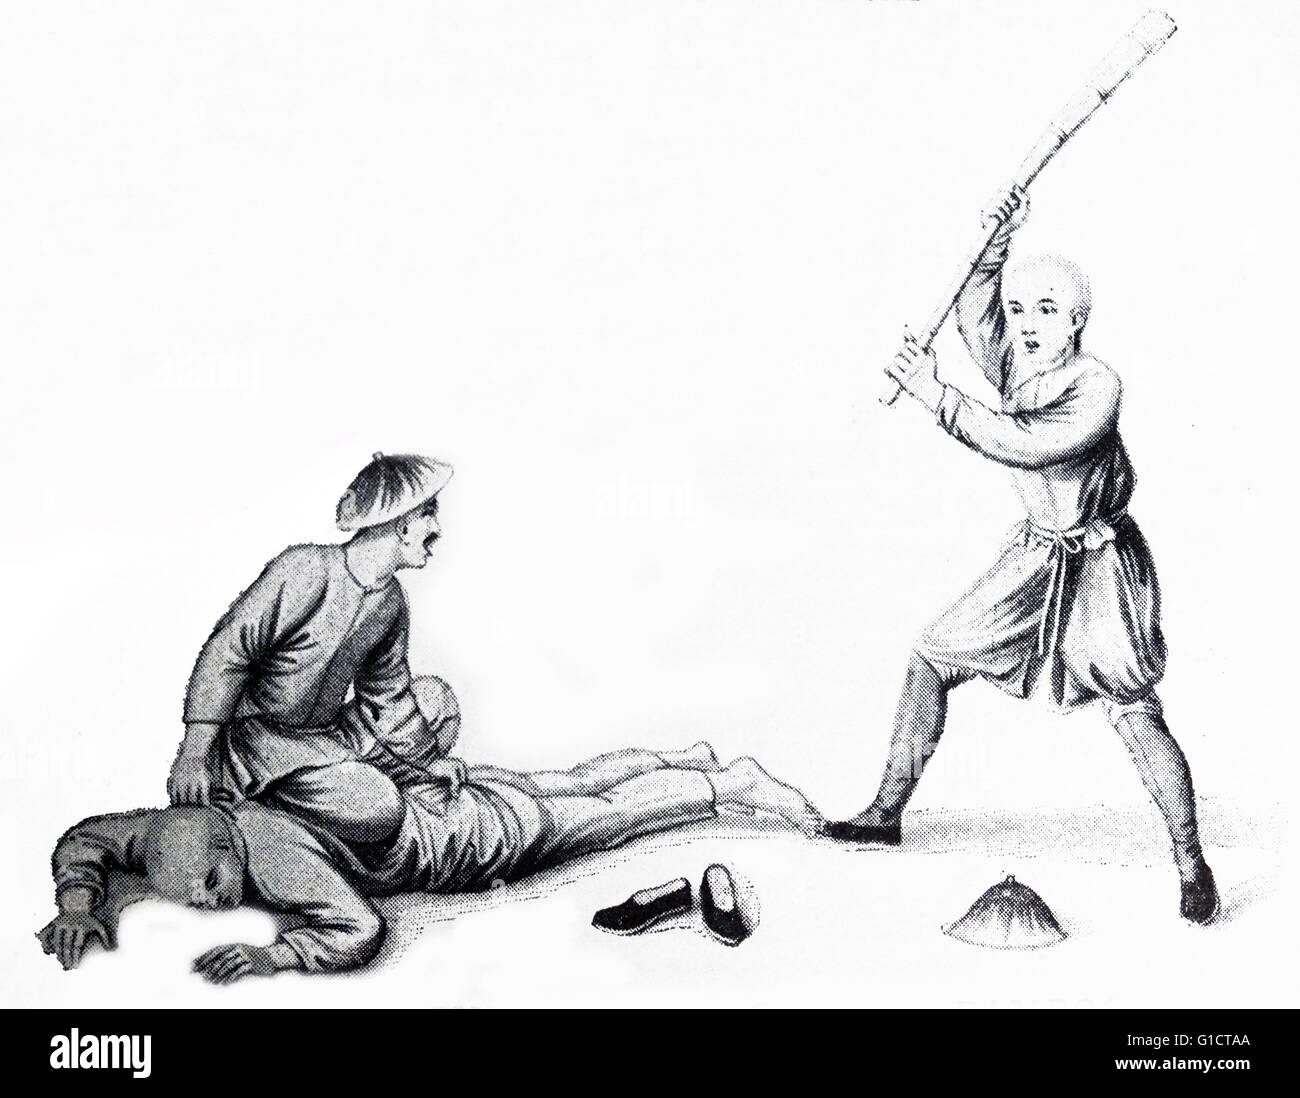 illustration depicting the punishment of the bamboo. Stock Photo